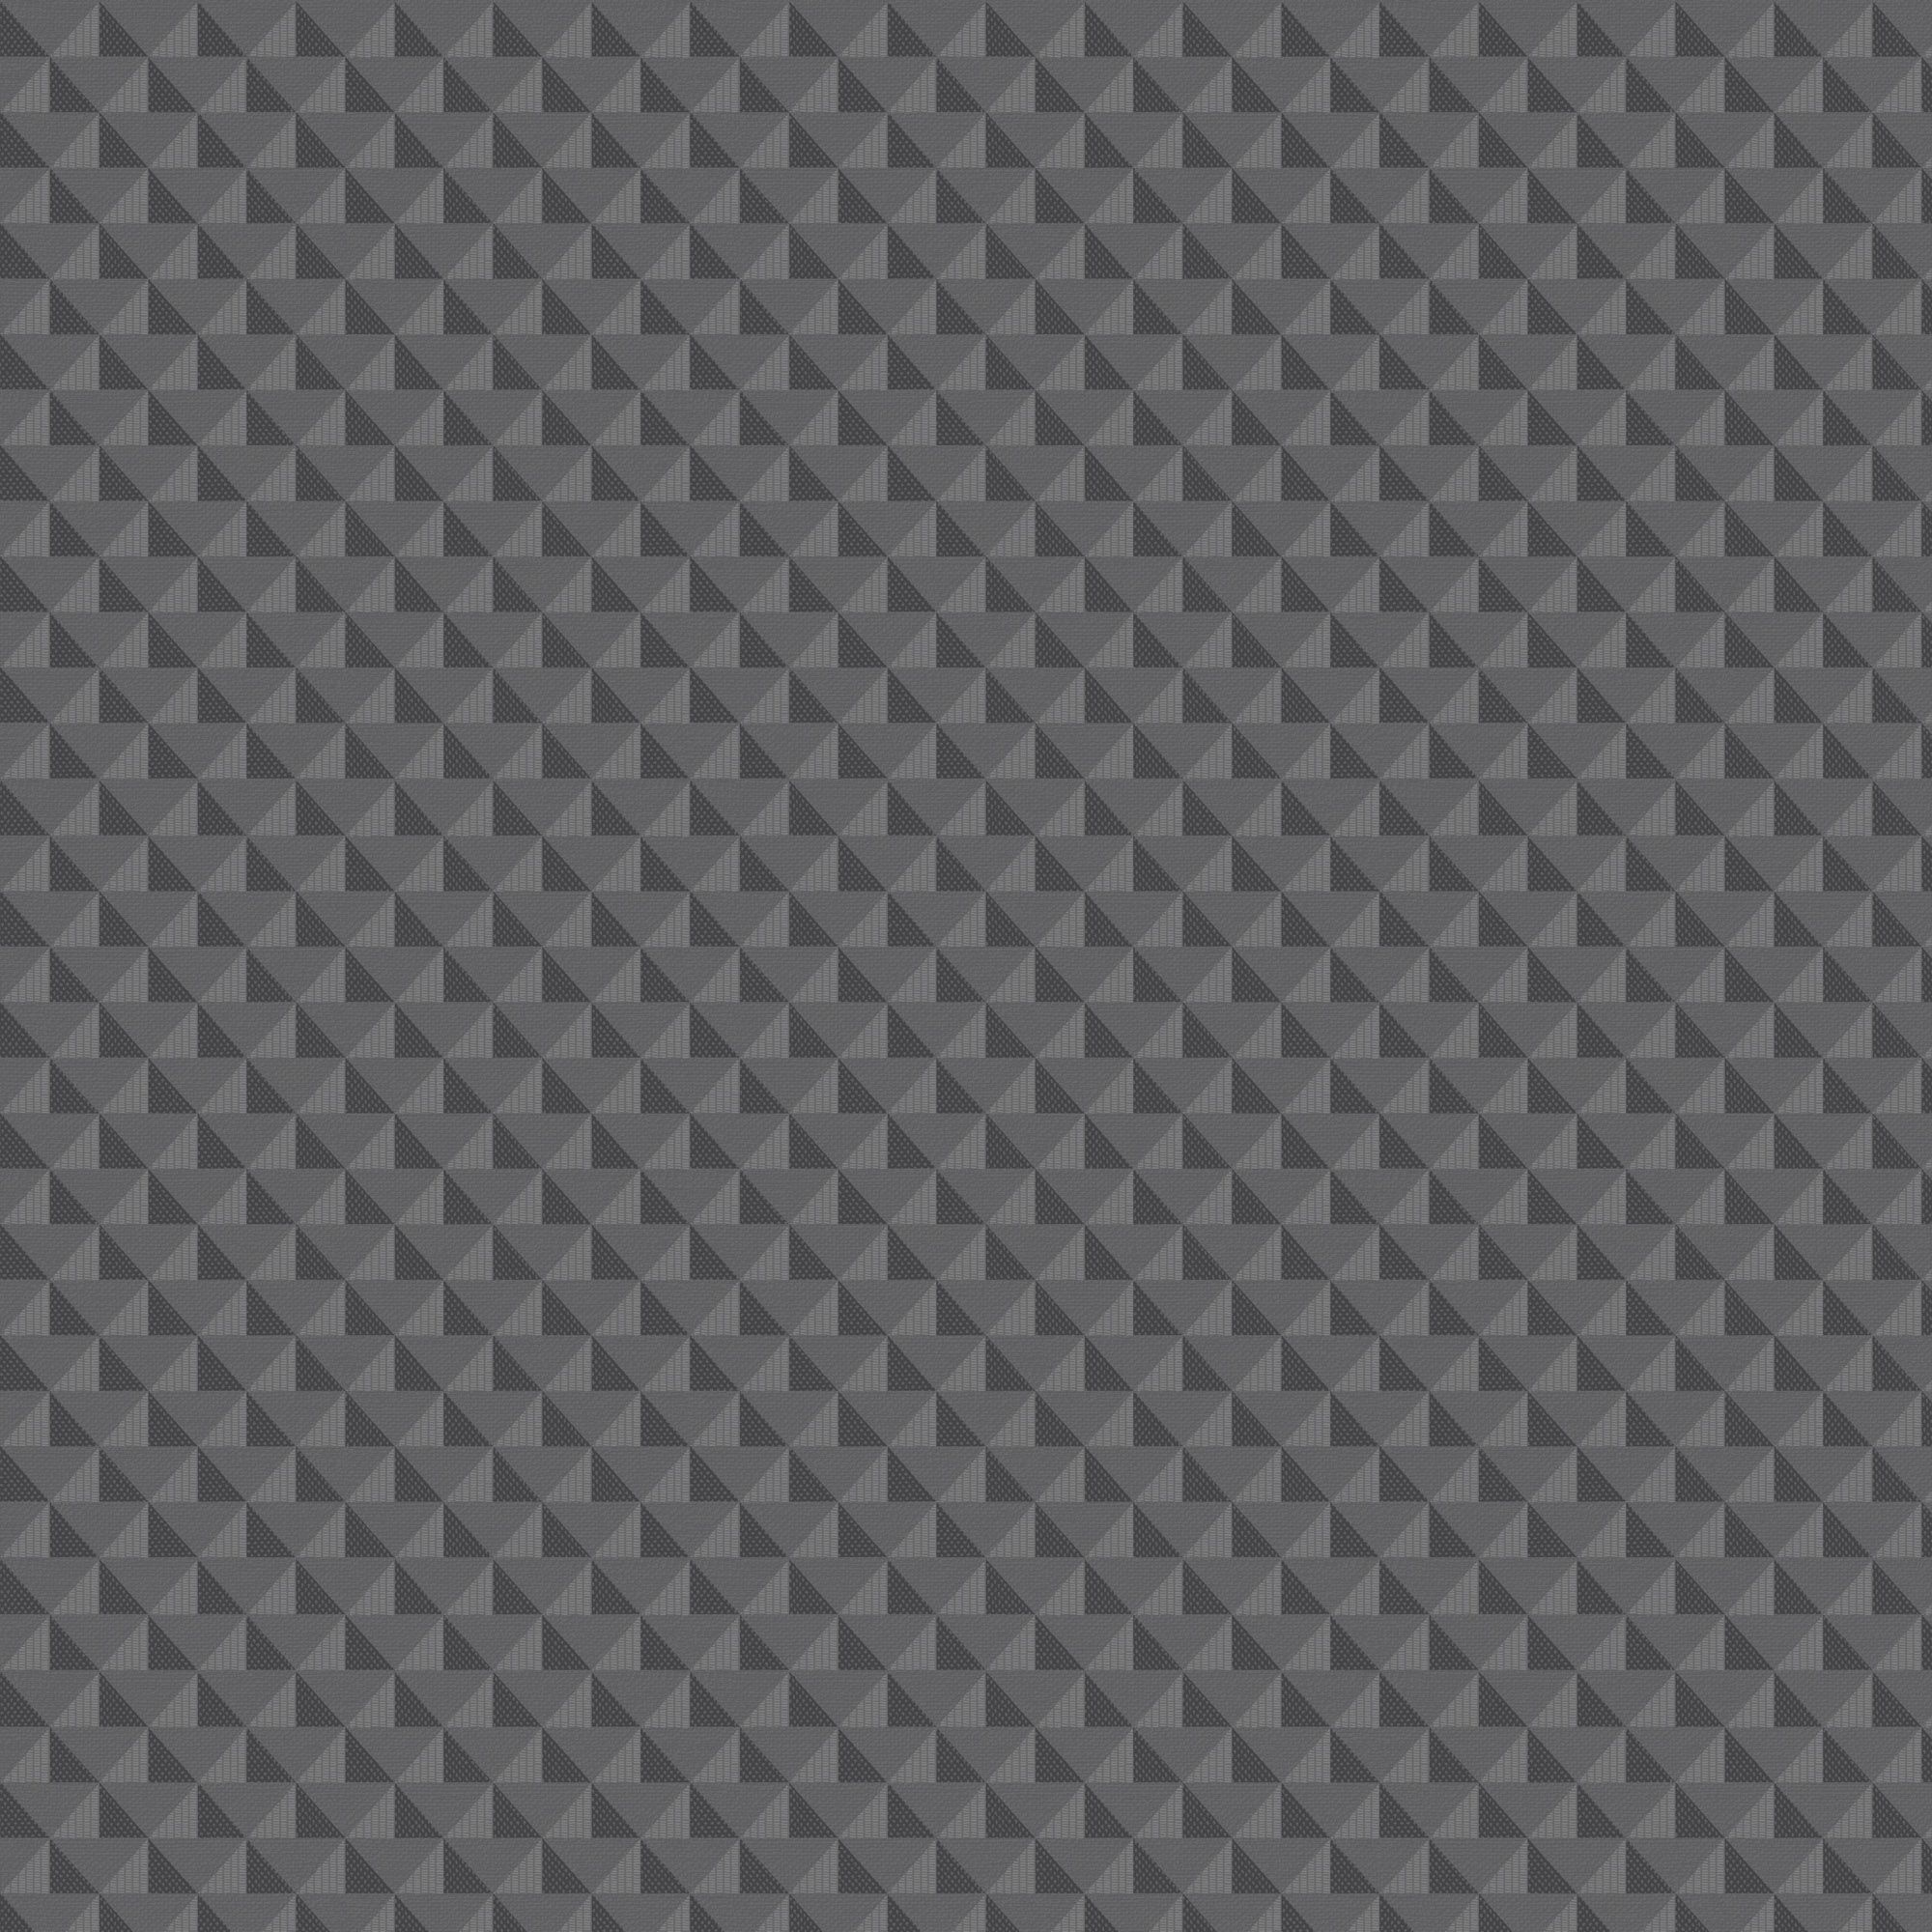 GoodHome Lyrata Black 3D effect Graphic Textured Wallpaper Sample